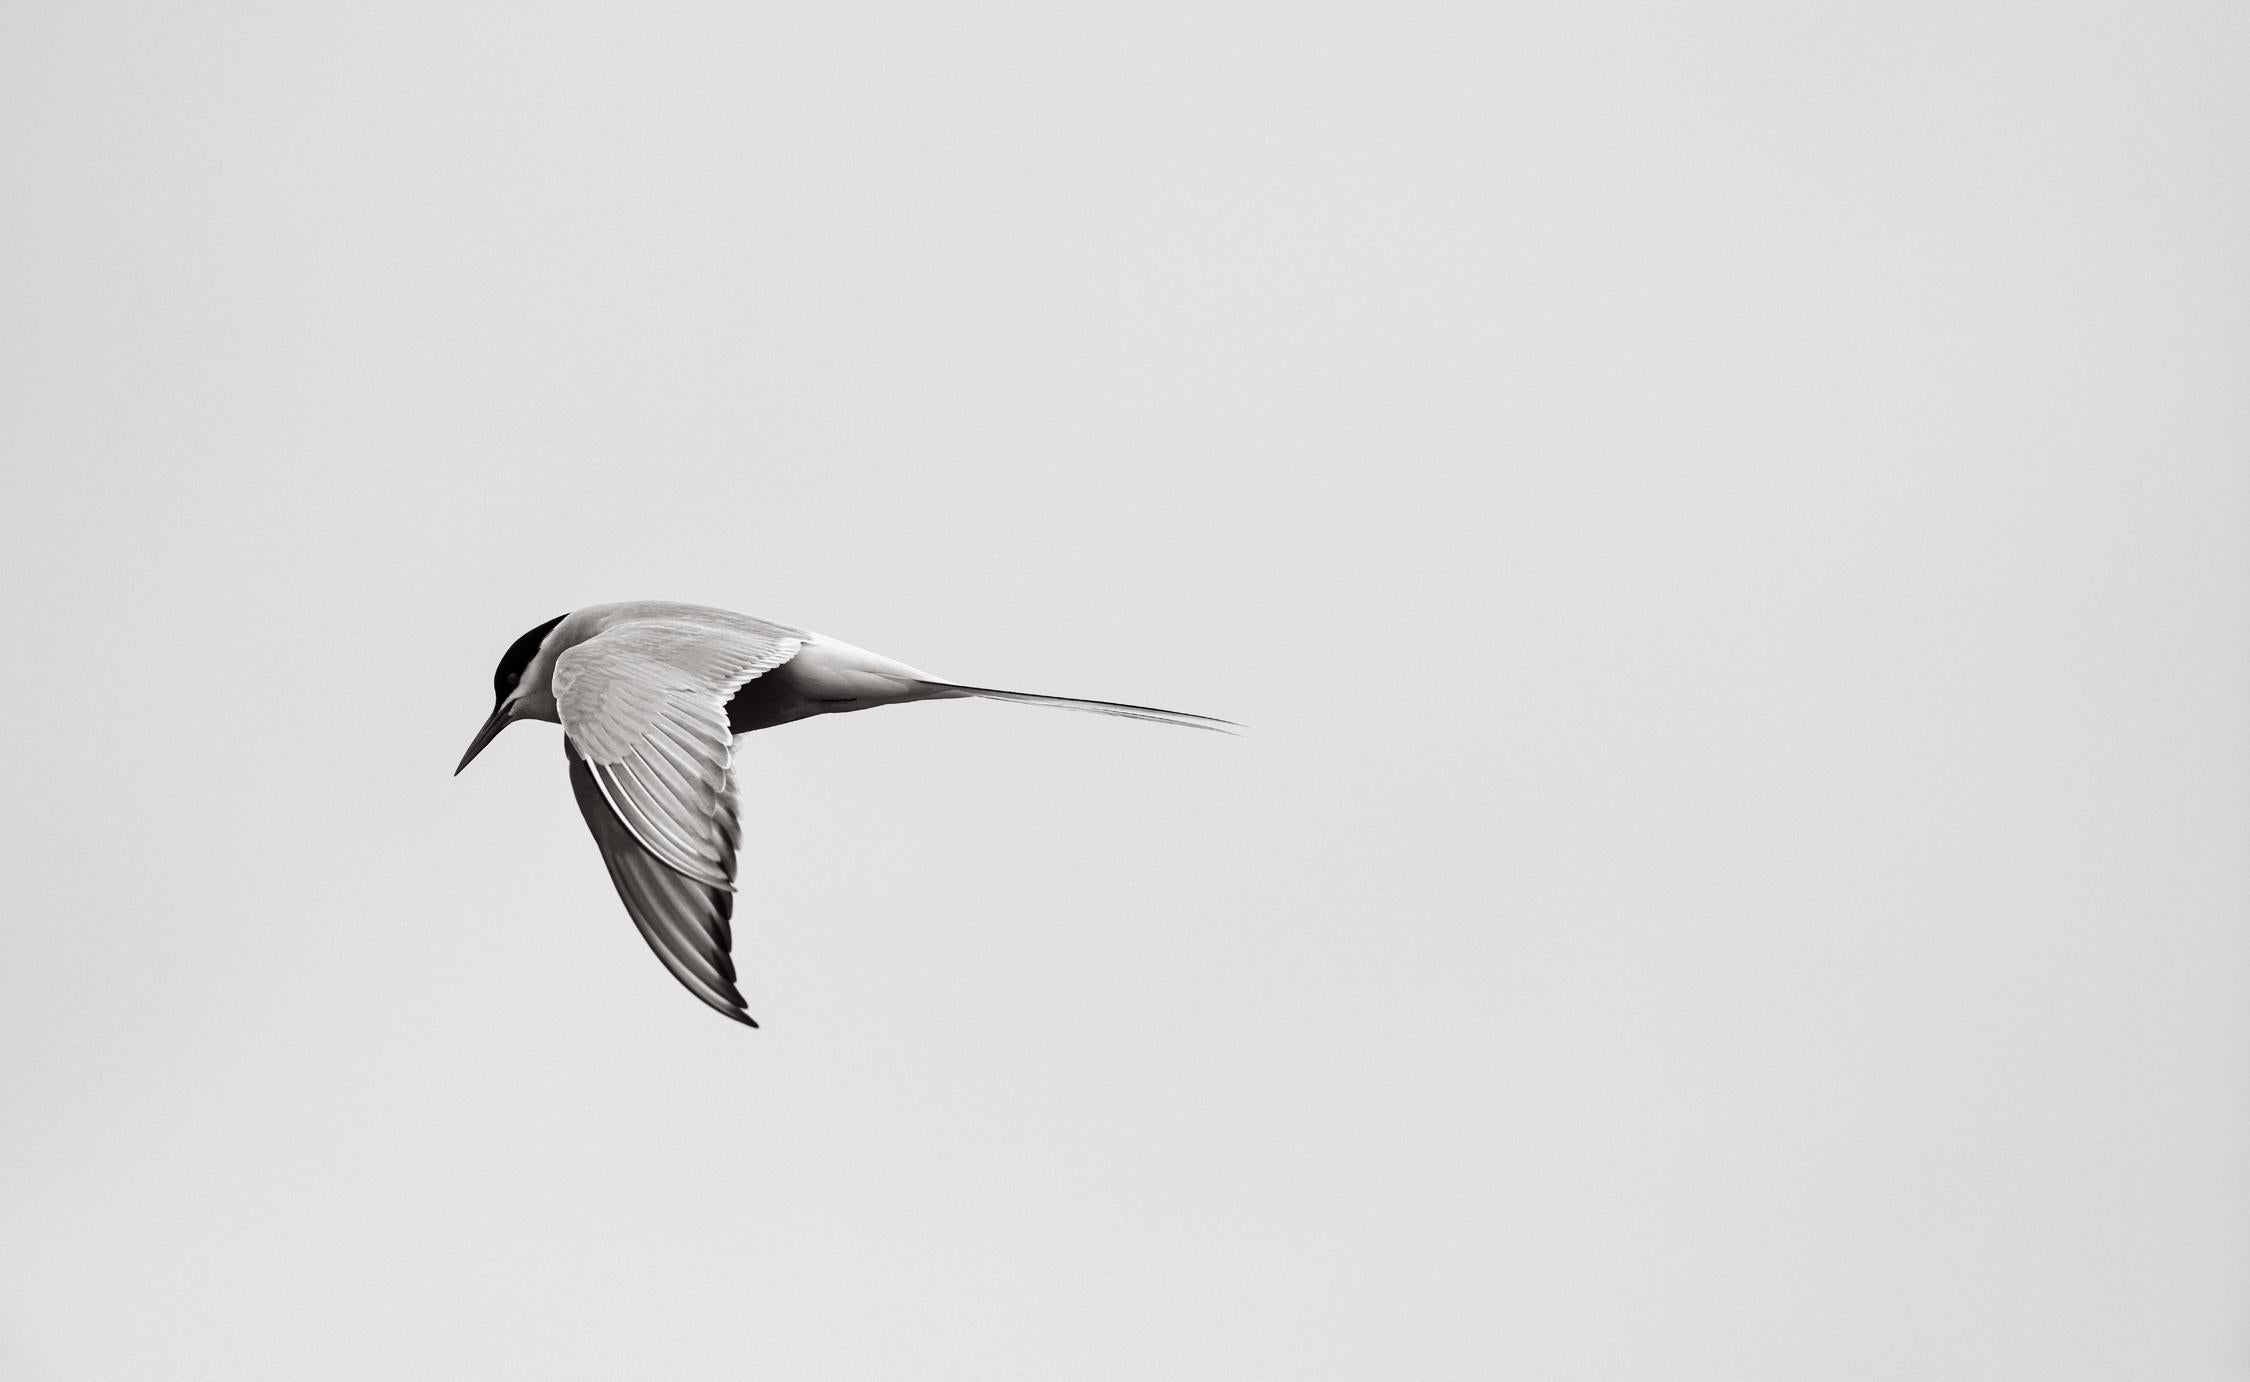 Drew Doggett Black and White Photograph - Minimal Black & White Photograph of a Bird in Mid-Flight